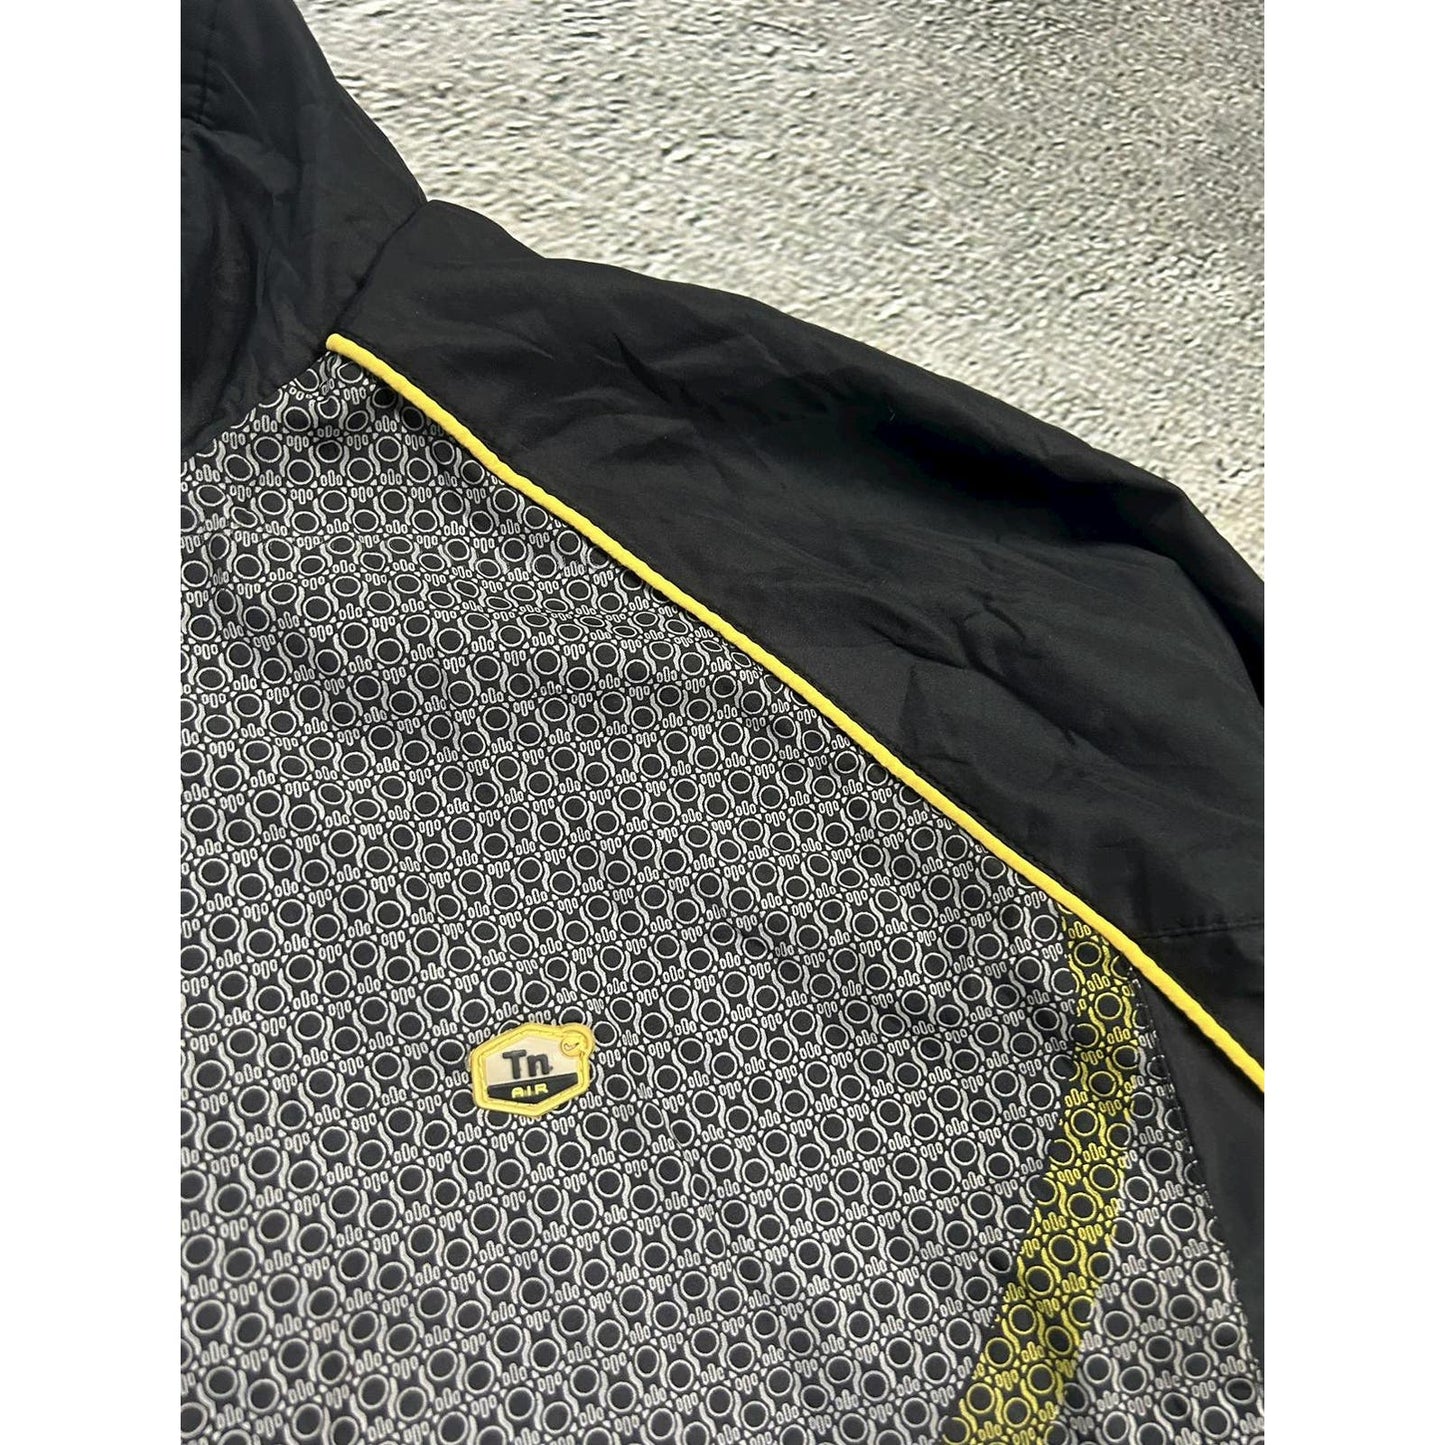 Nike TN track jacket nylon vintage drill Y2K black yellow